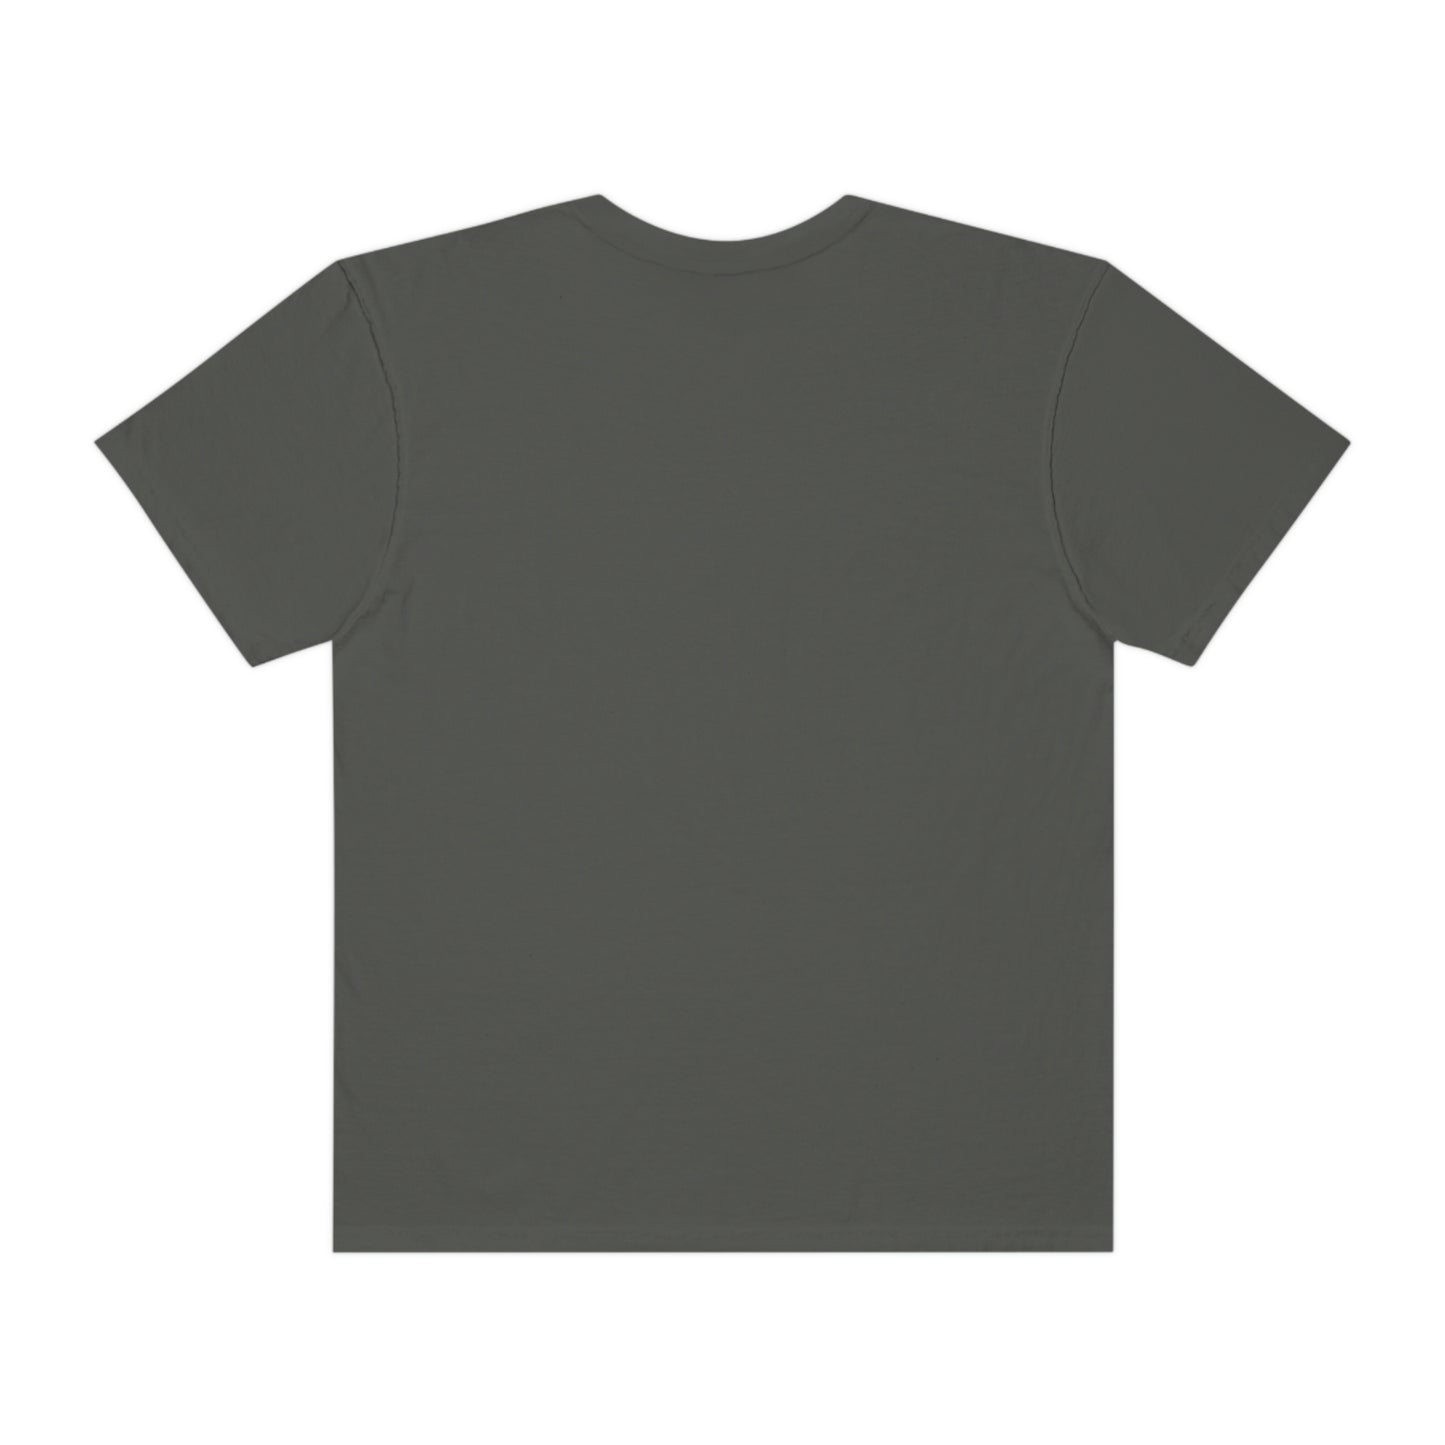 "labgrown." drip Garment-Dyed T-shirt